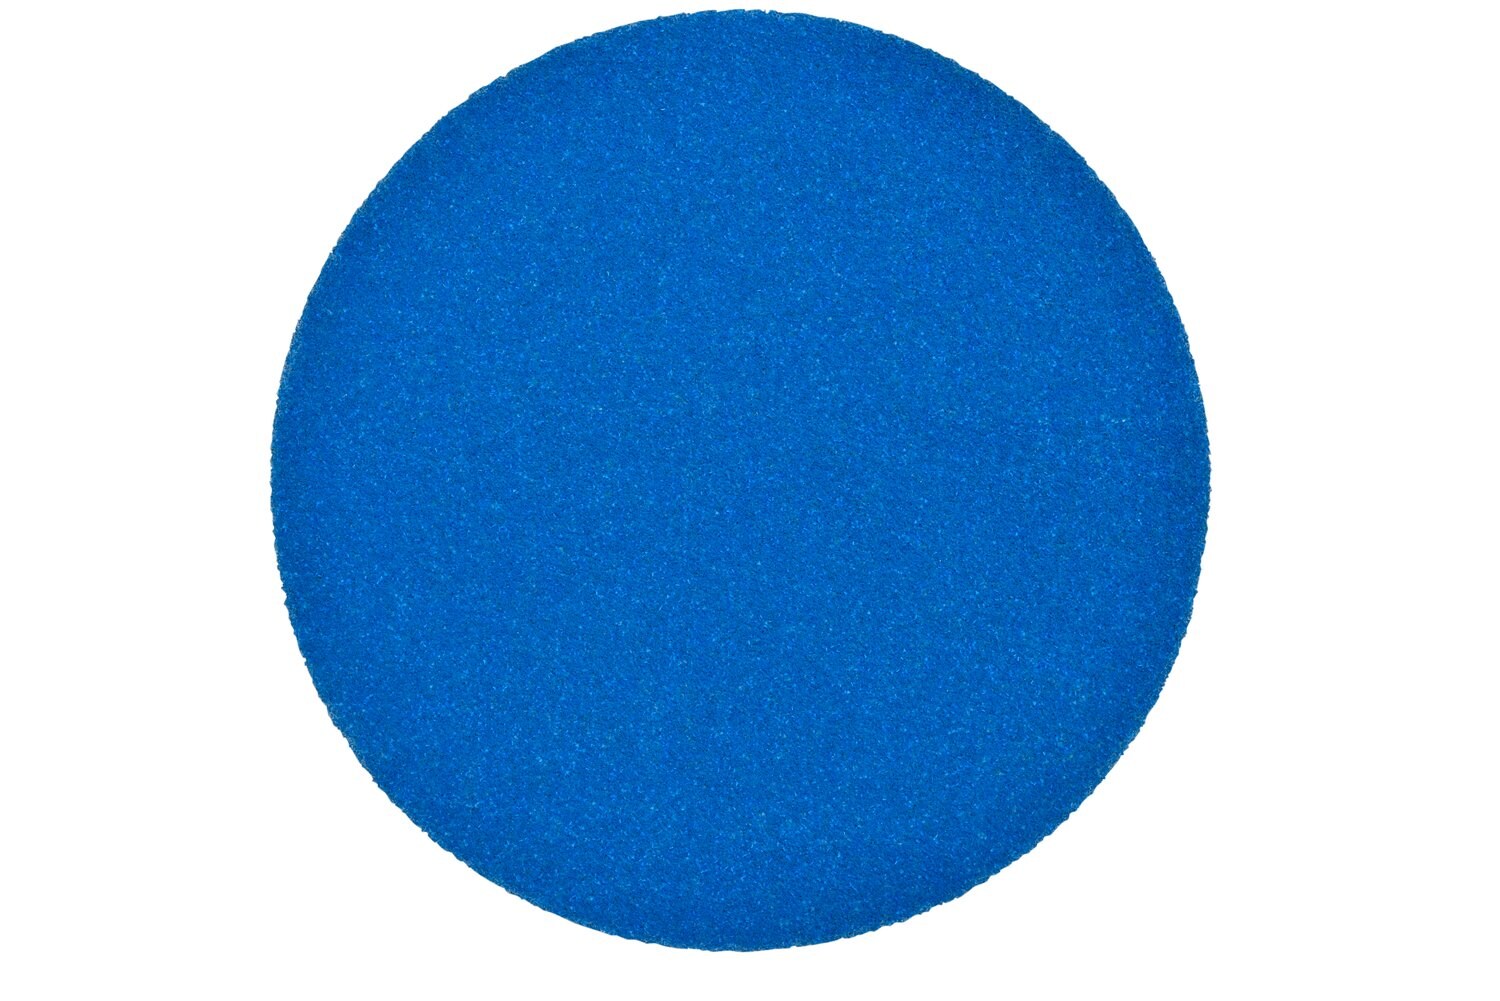 7100199419 - 3M Hookit Blue Abrasive Disc, 36256, 5 in, 180 grade, No Hole, 50 discs per carton, 4 cartons per case